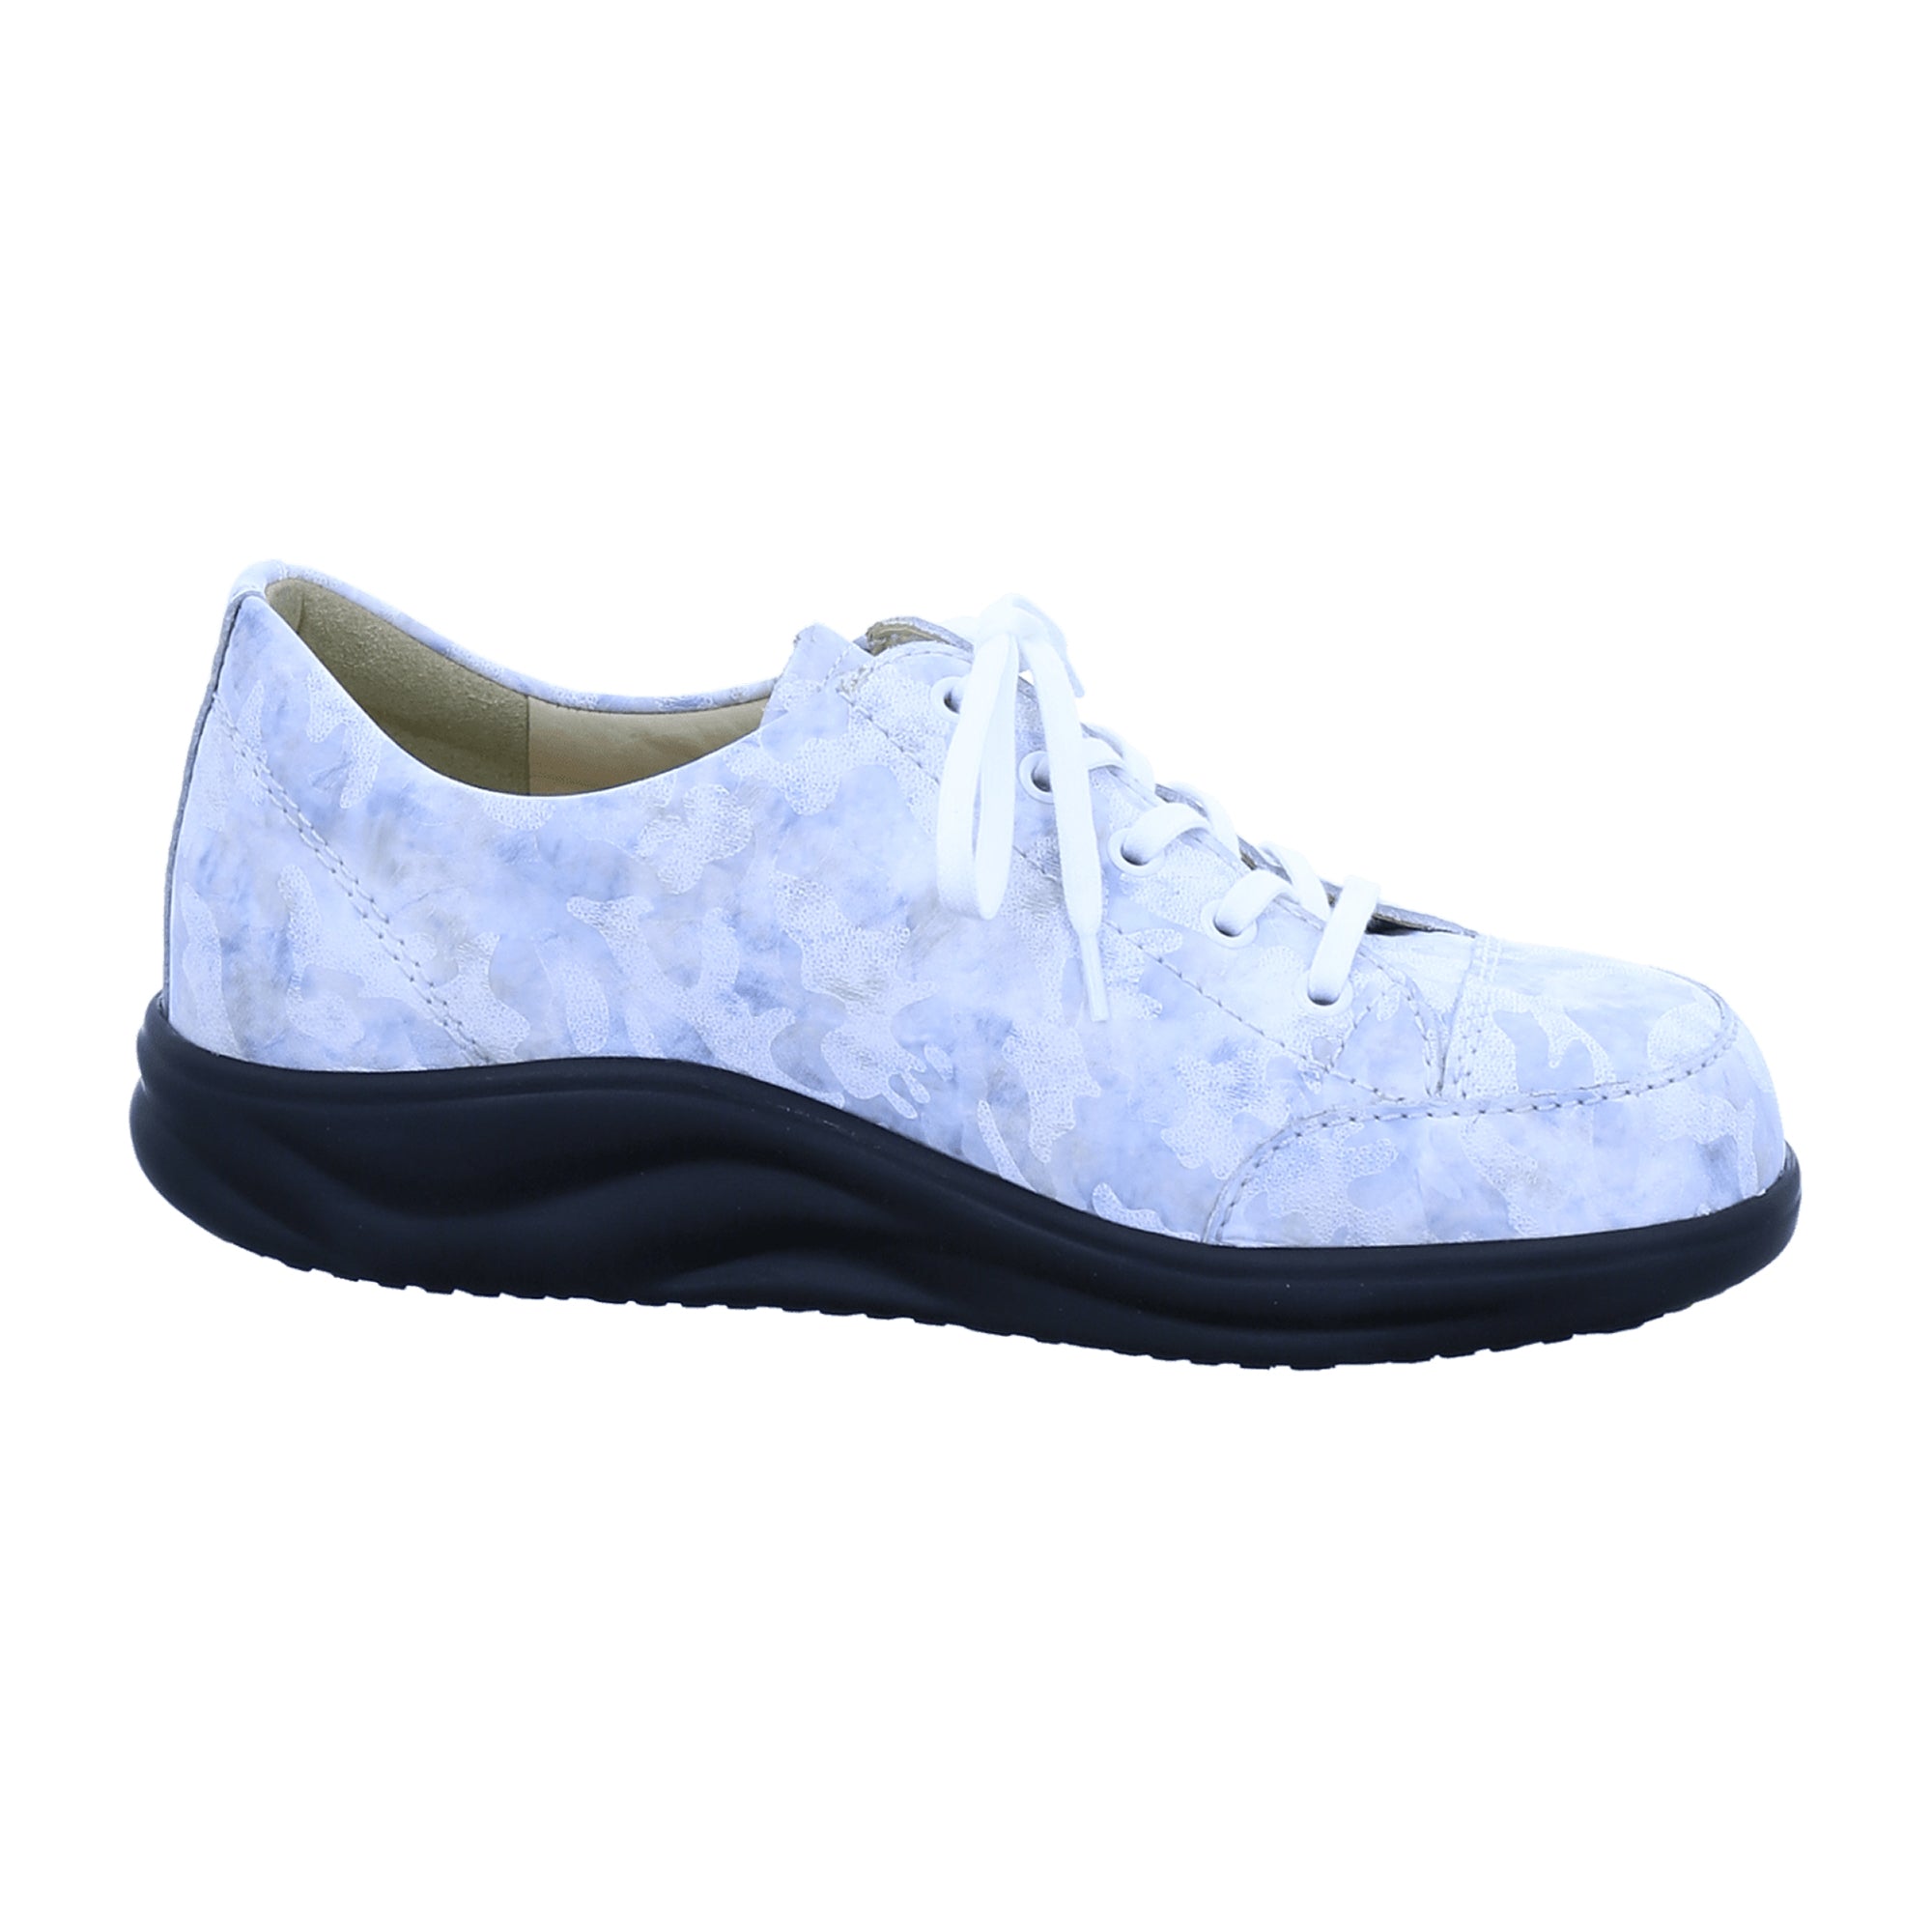 Finn Comfort Ikebukuro Women's Orthopedic Walking Shoes - Trendy White